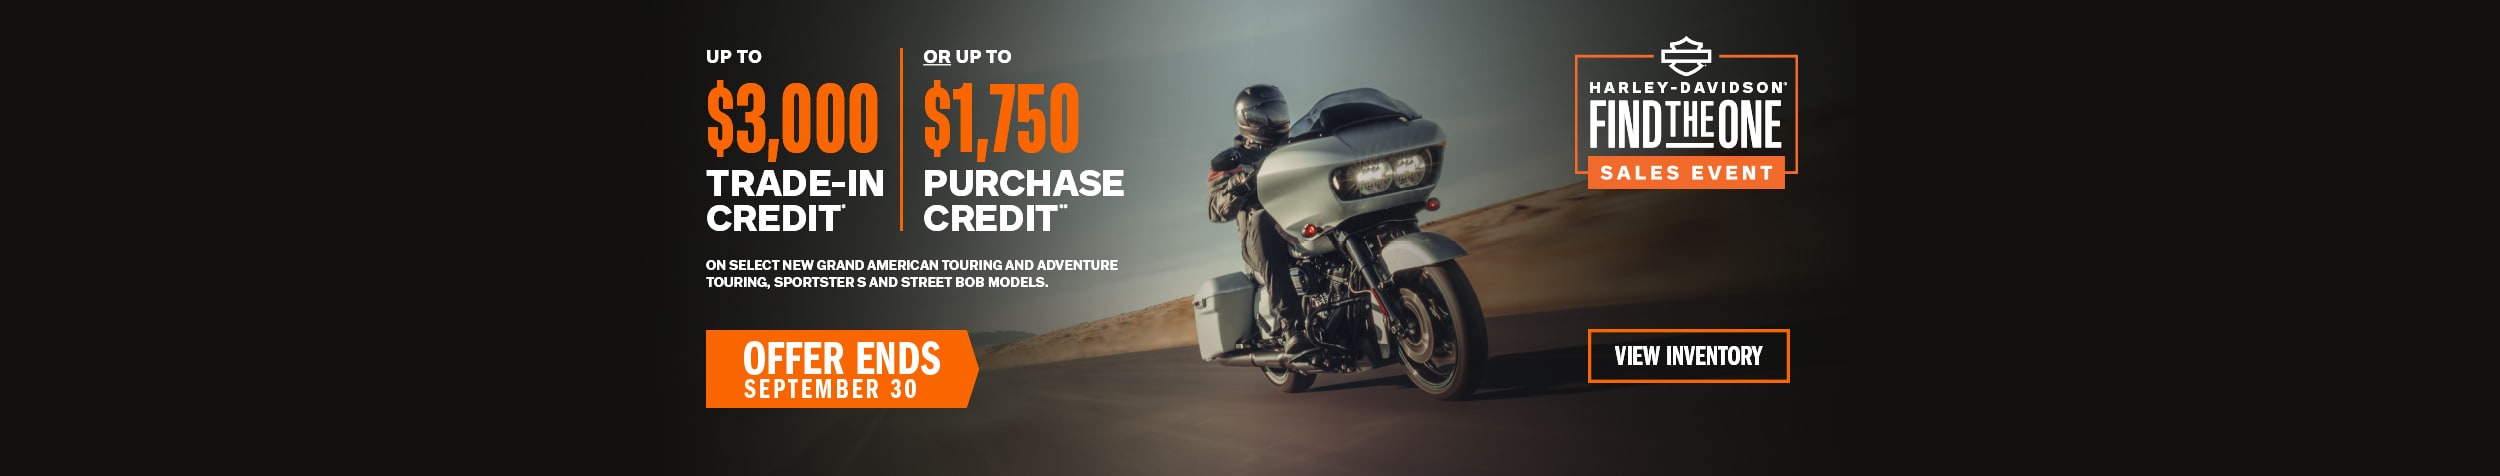 Harley-Davidson – Find the One Sales Event